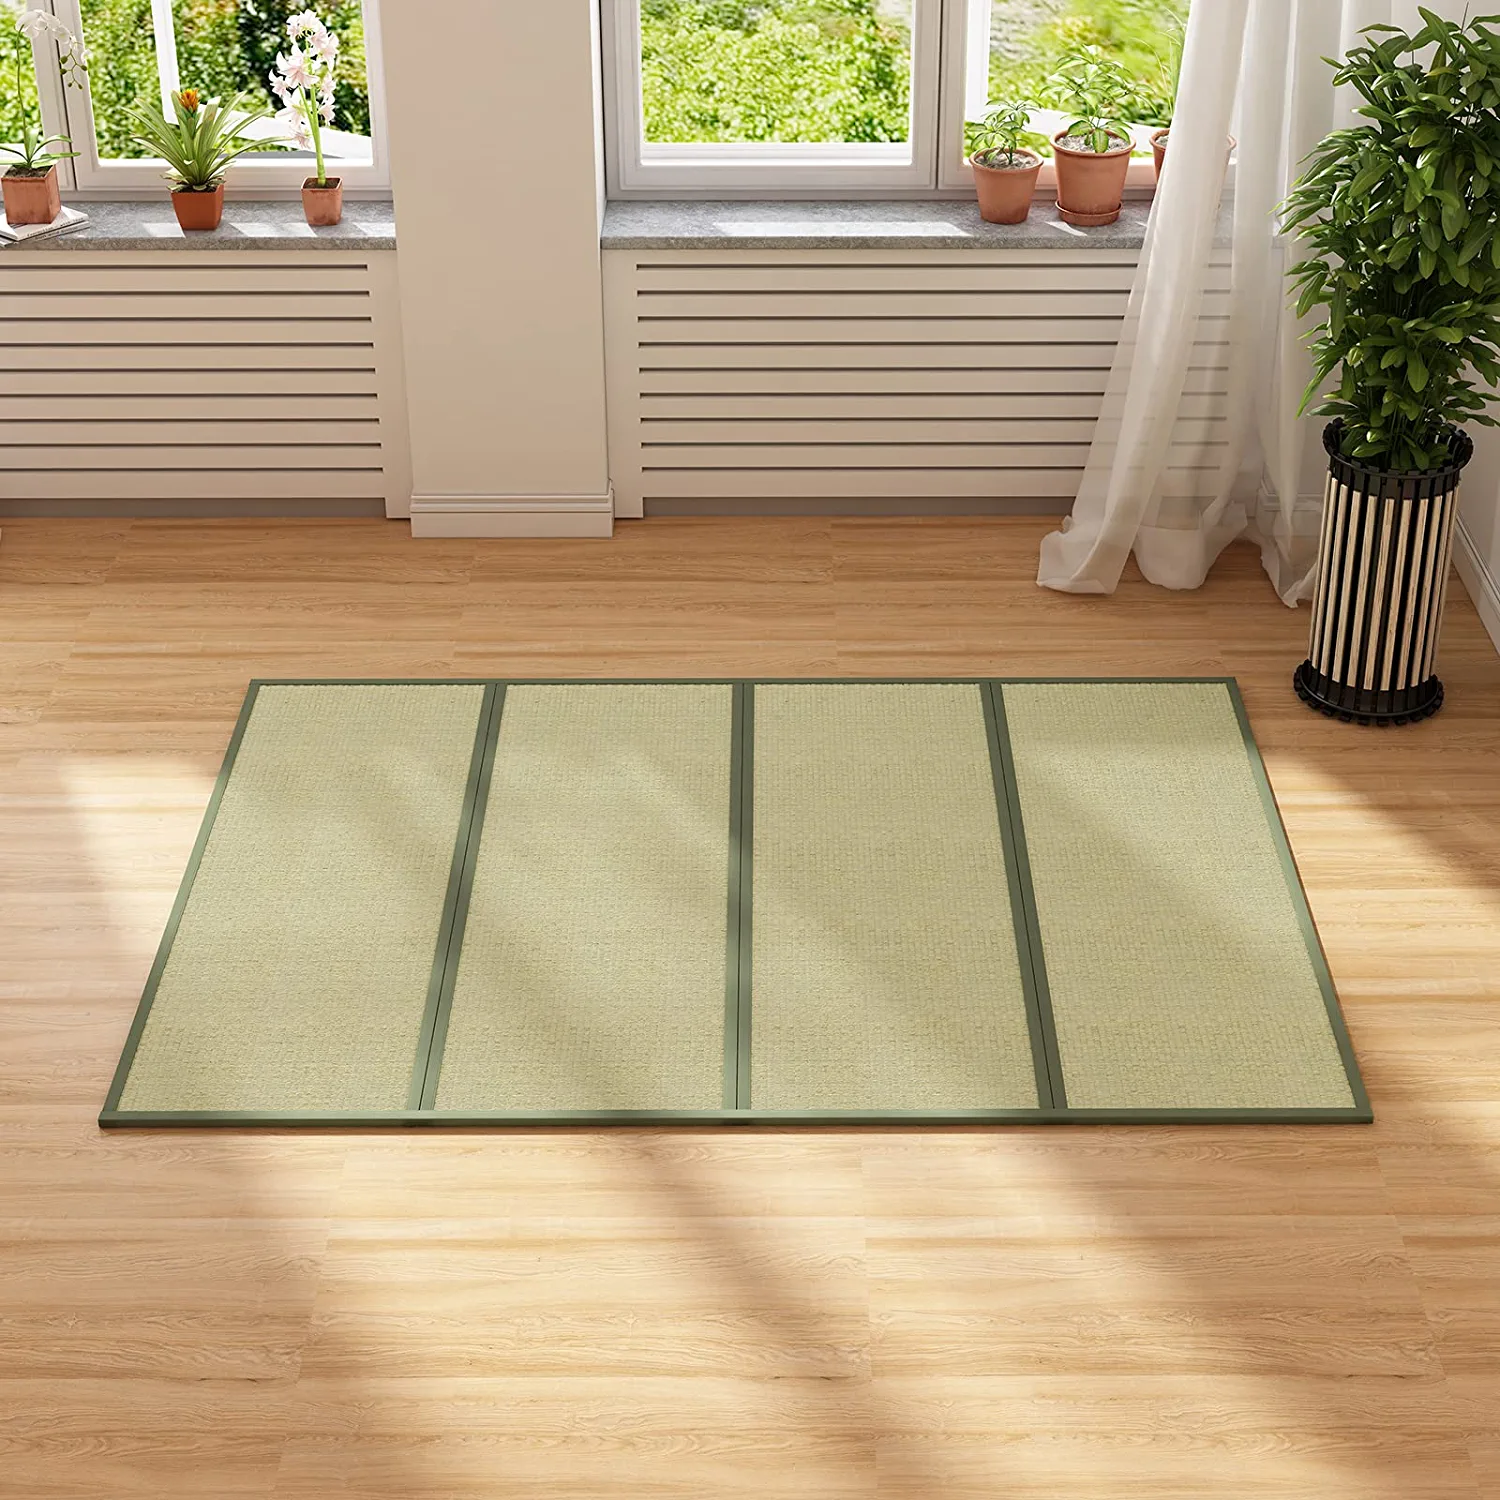 Mjkone Full Size Tatami mat, Natural Grass Tatami,Folding Japanese Floor  Sleeping Mattress with Non-Slip Breathable Memory Foam for Small